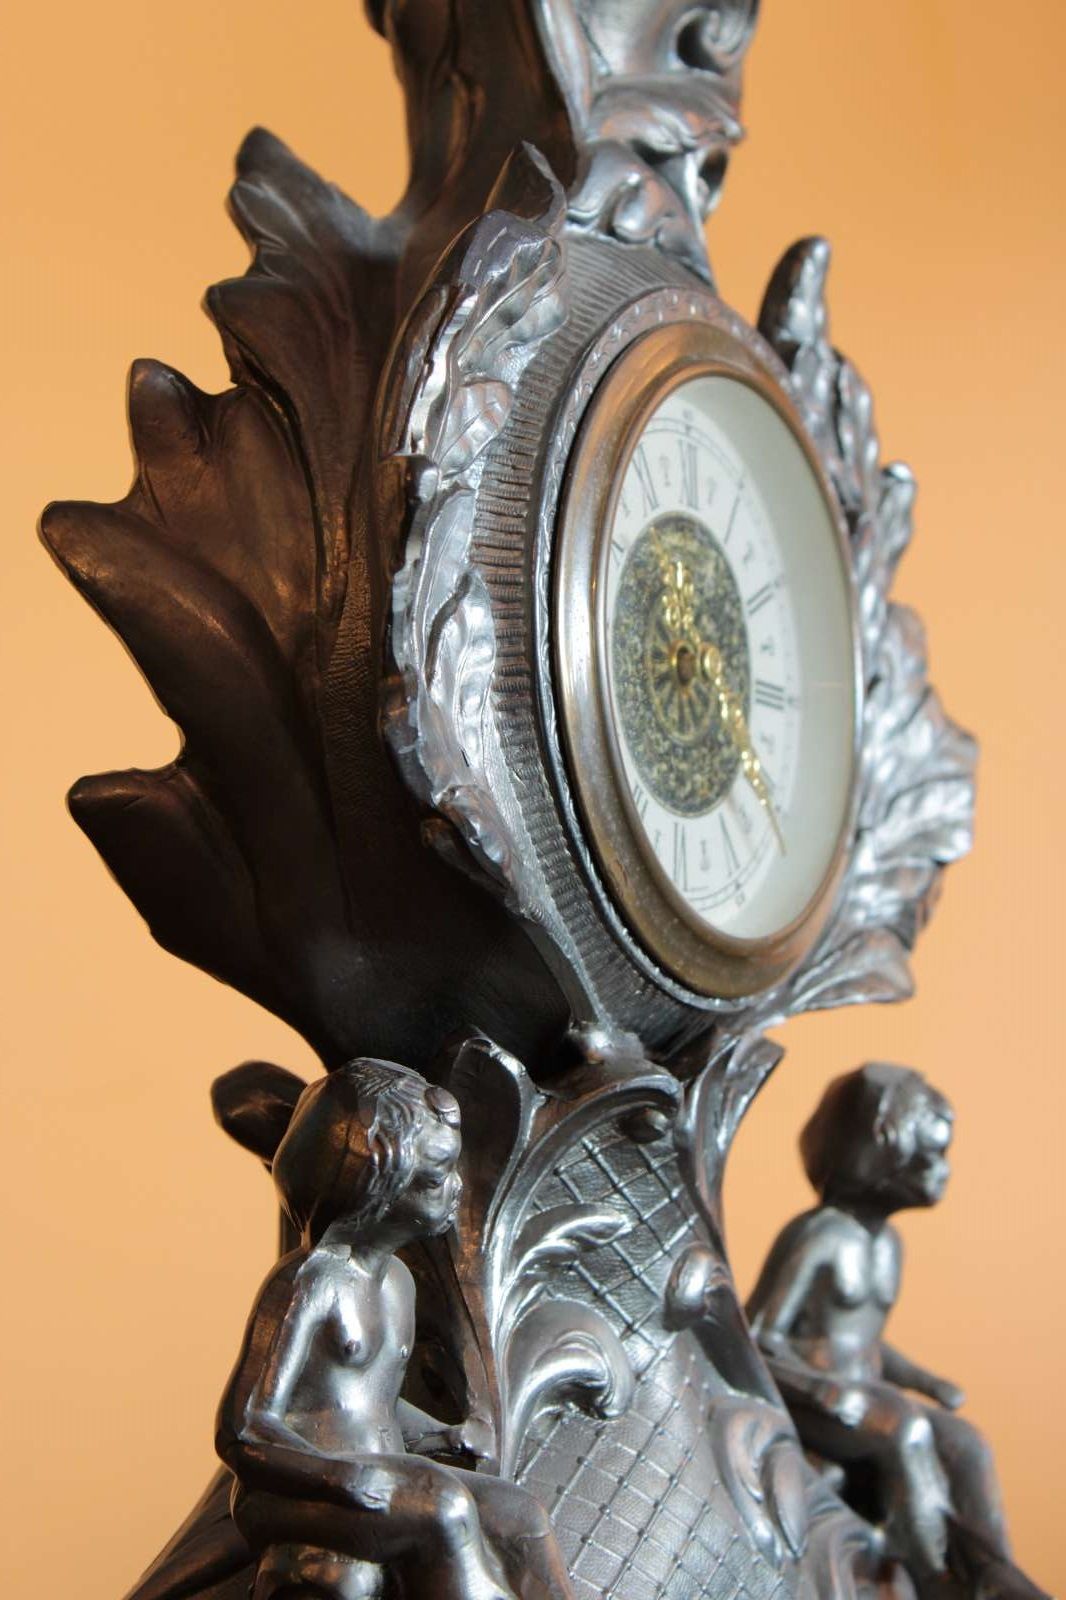 Antique Desk Clock,Antique clock with angel figure